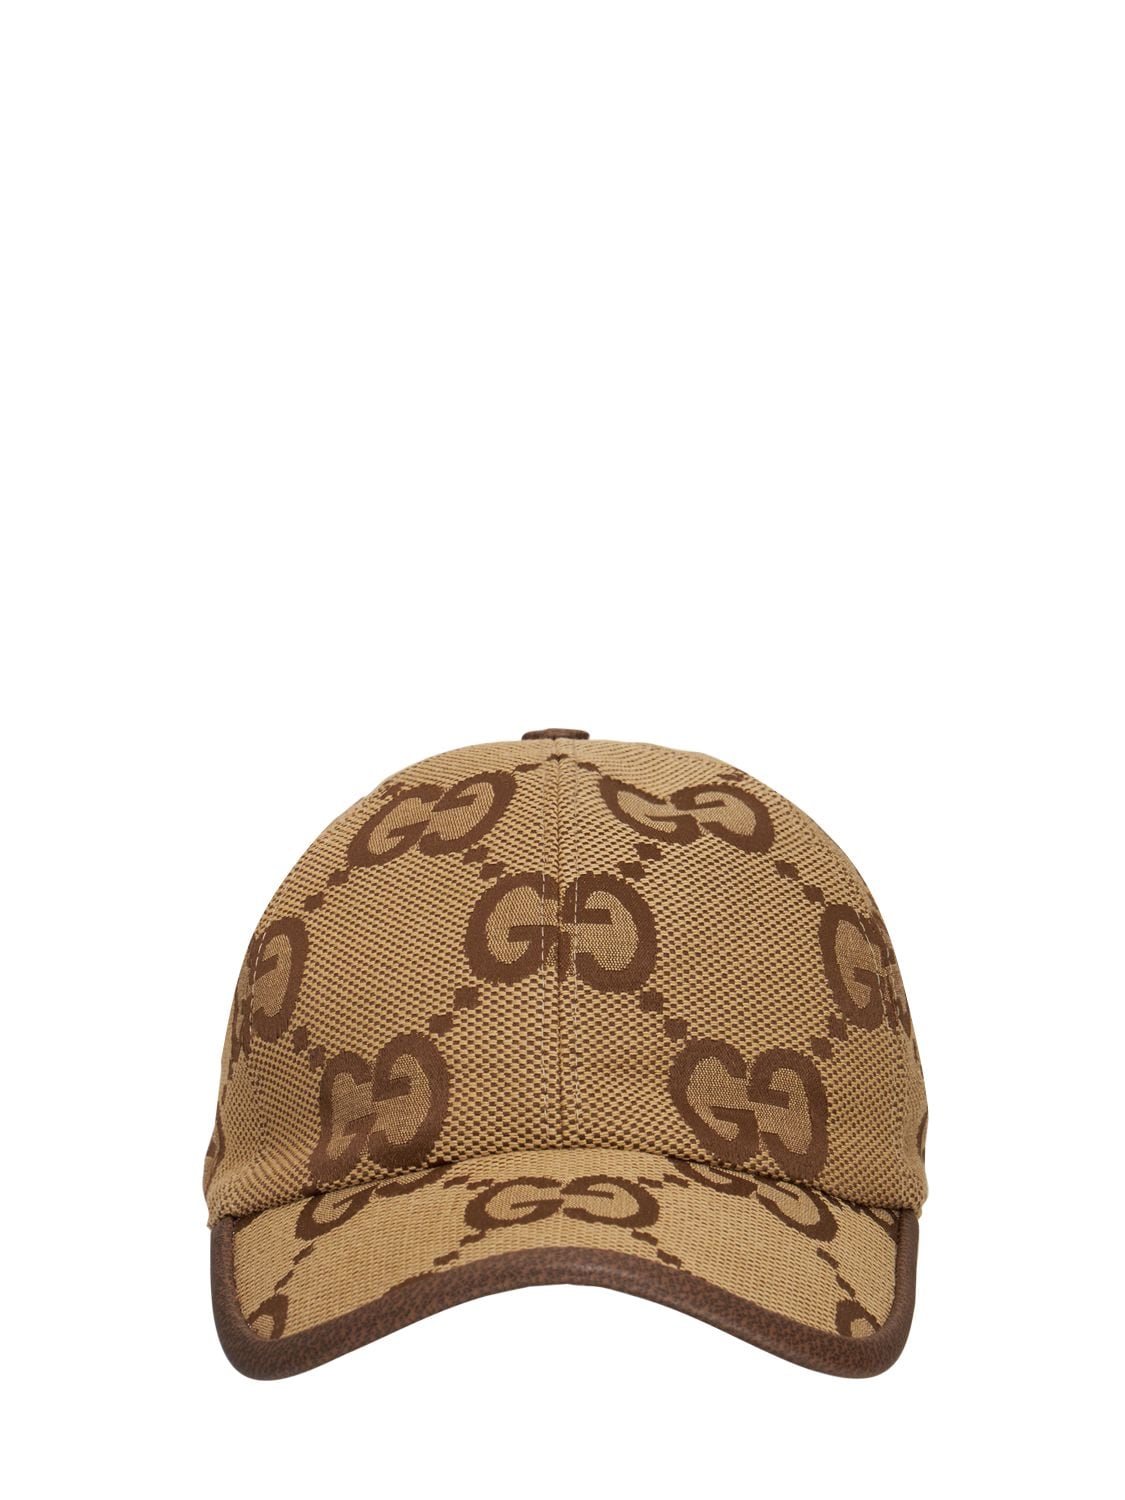 Image of Gg Maxi Baseball Hat